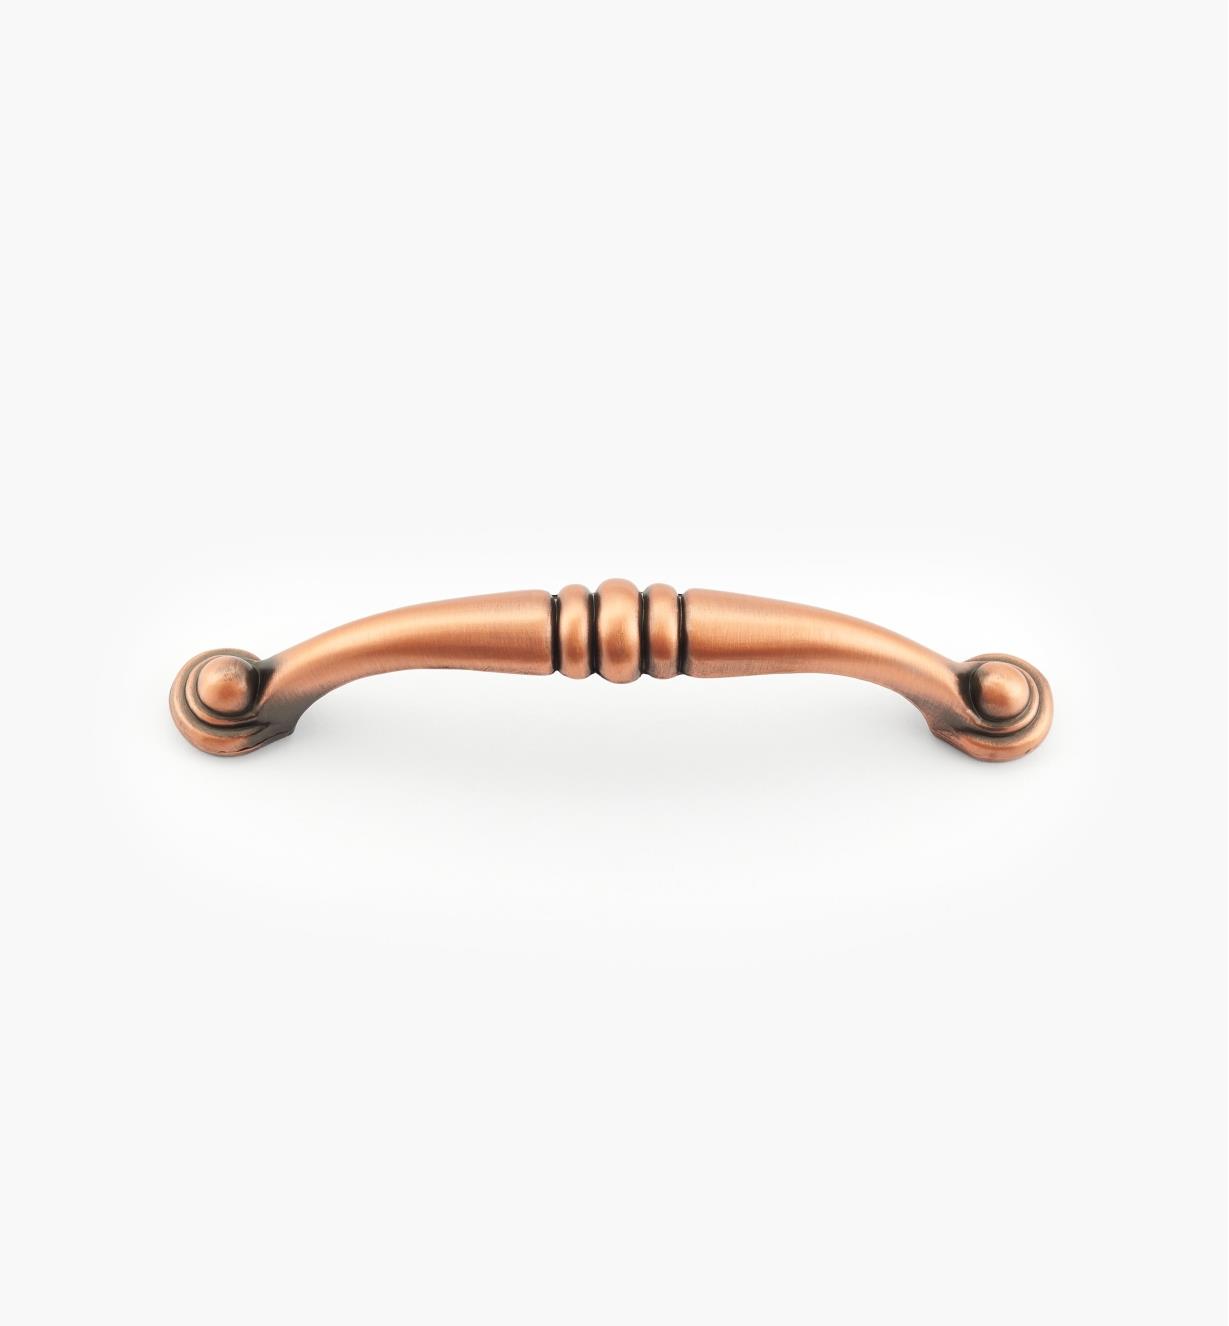 02G1812 - Brushed Antique Copper Handle